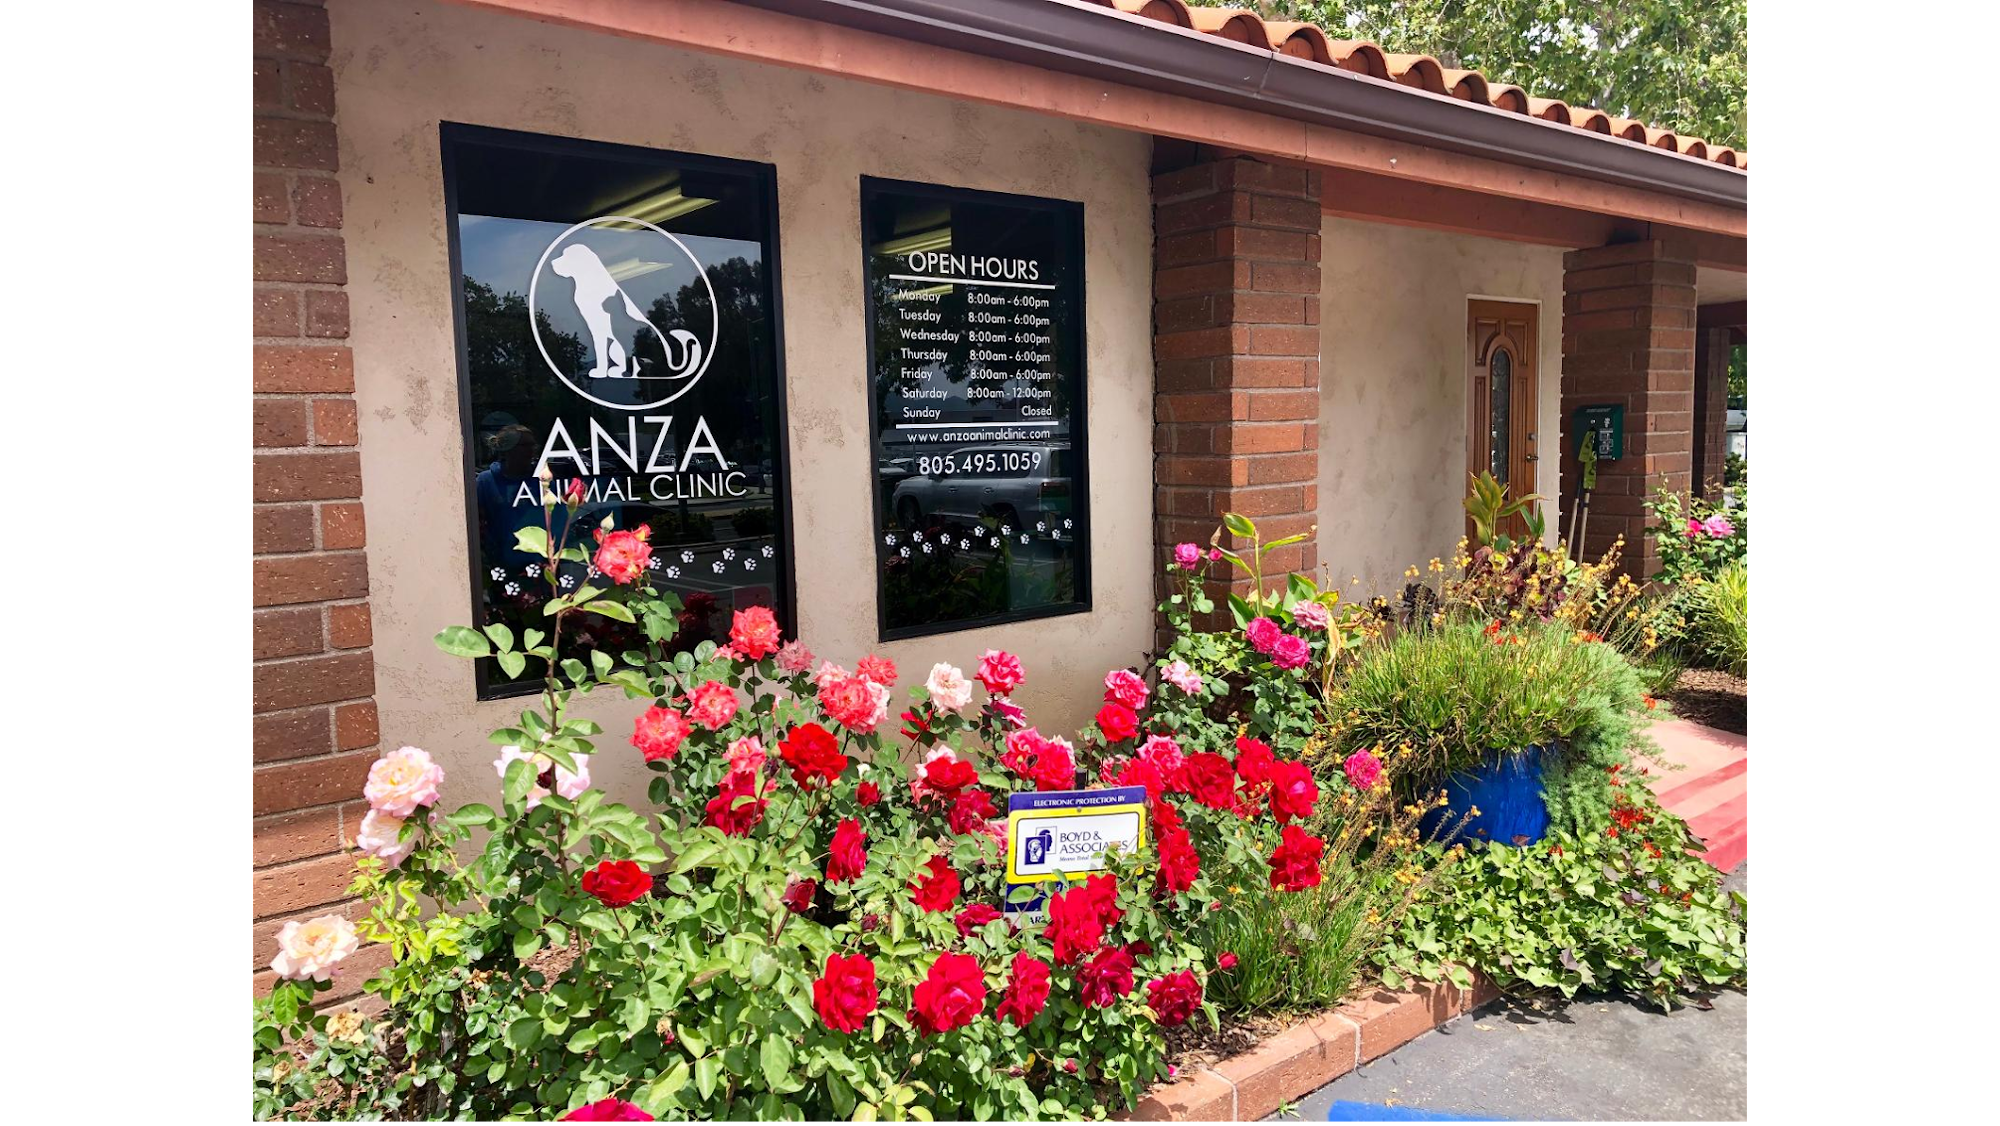 Anza Animal Clinic